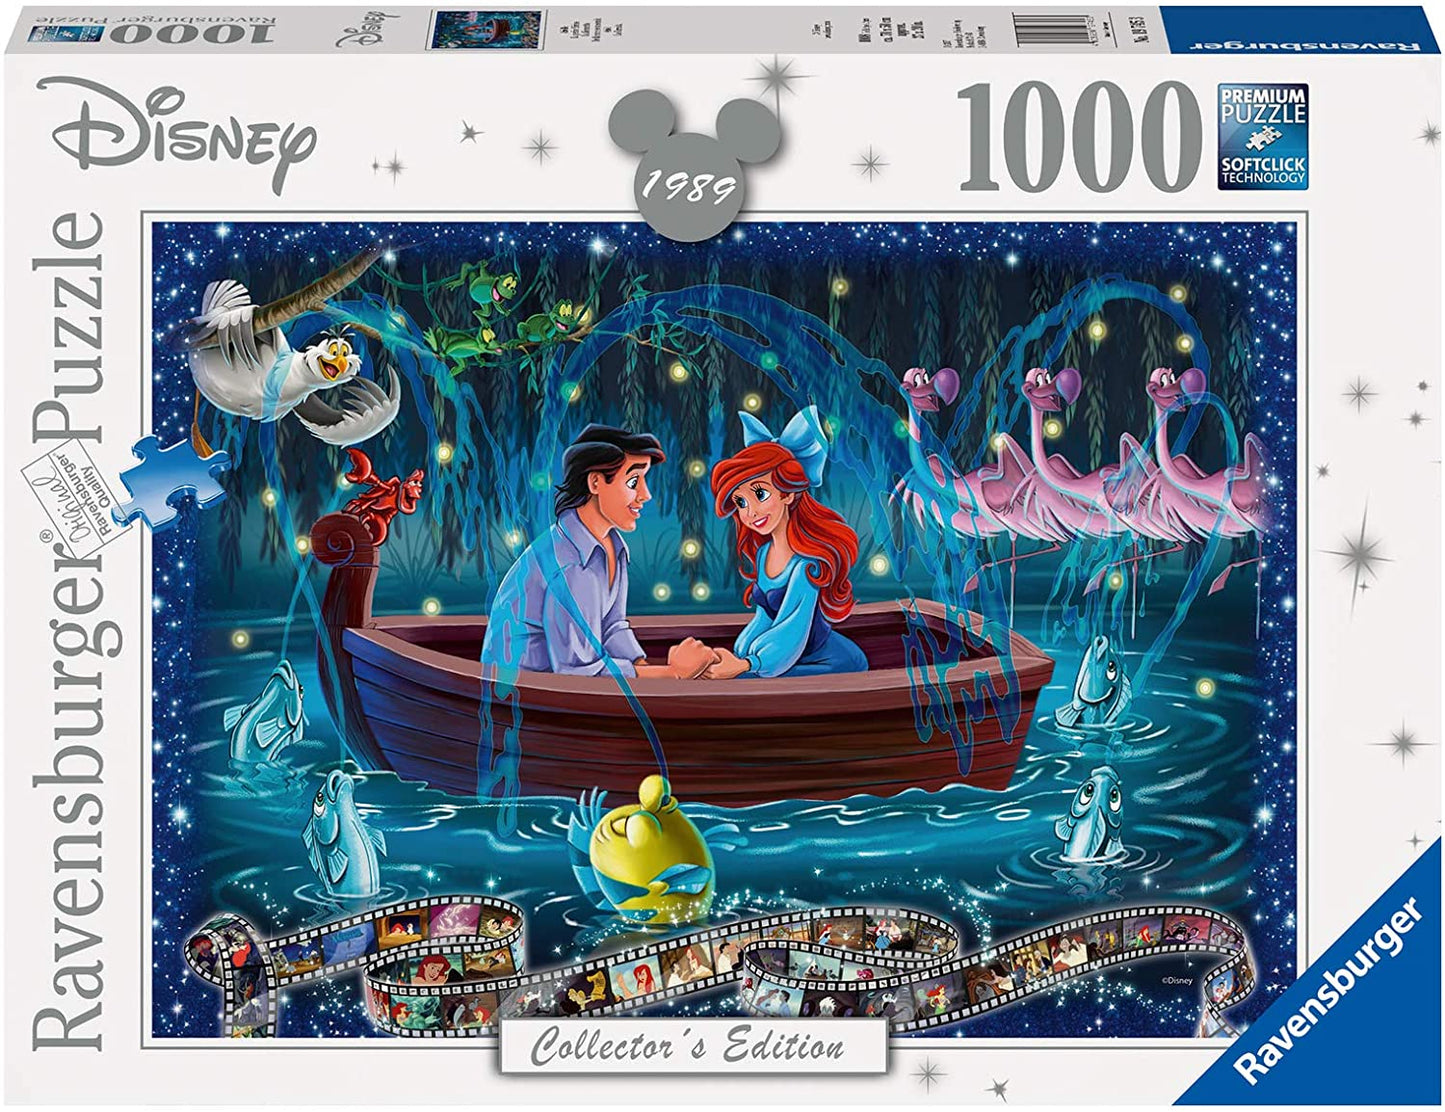 Ravensburger - Disney Collector's Edition Little Mermaid - 1000 Piece Jigsaw Puzzle